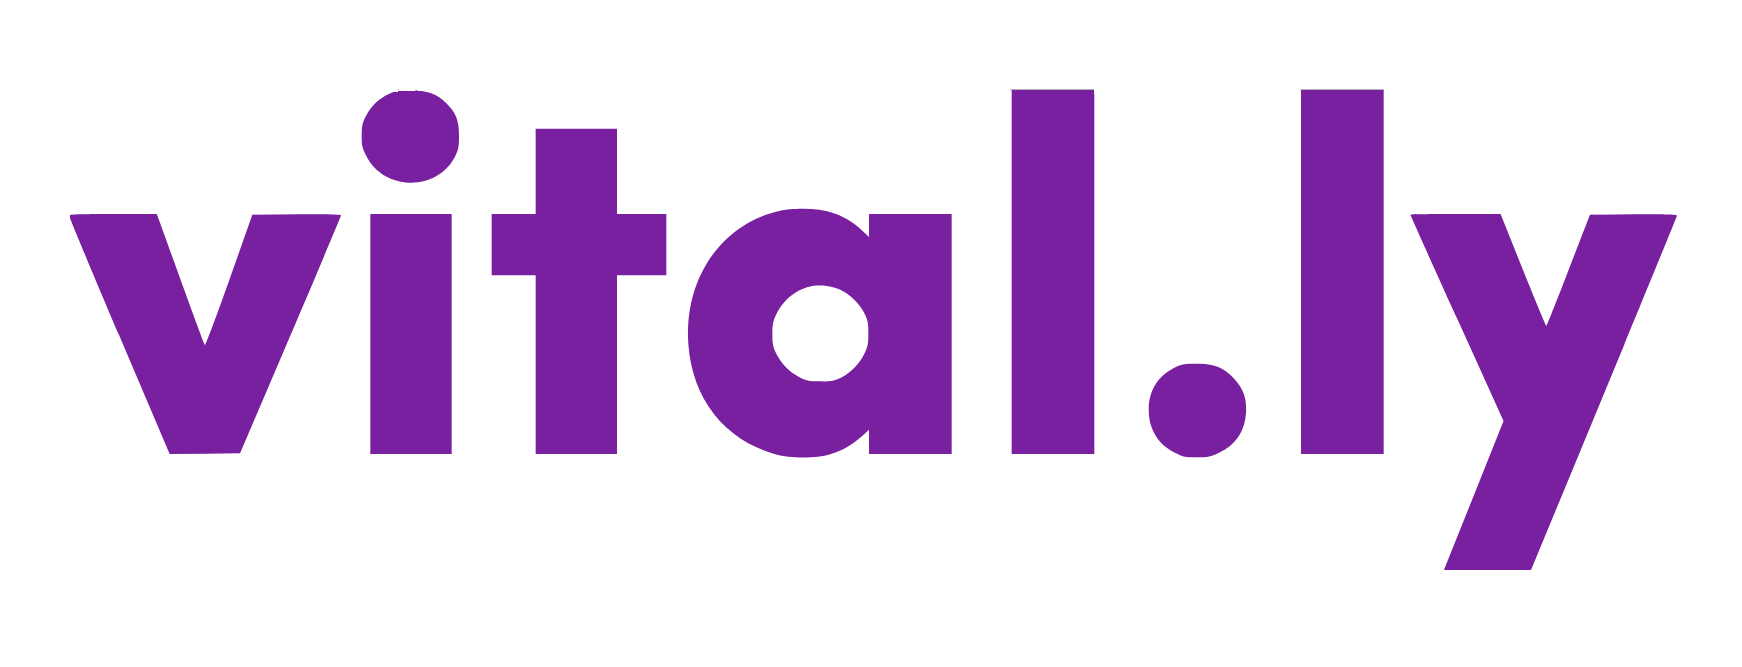 Vital.ly Logo